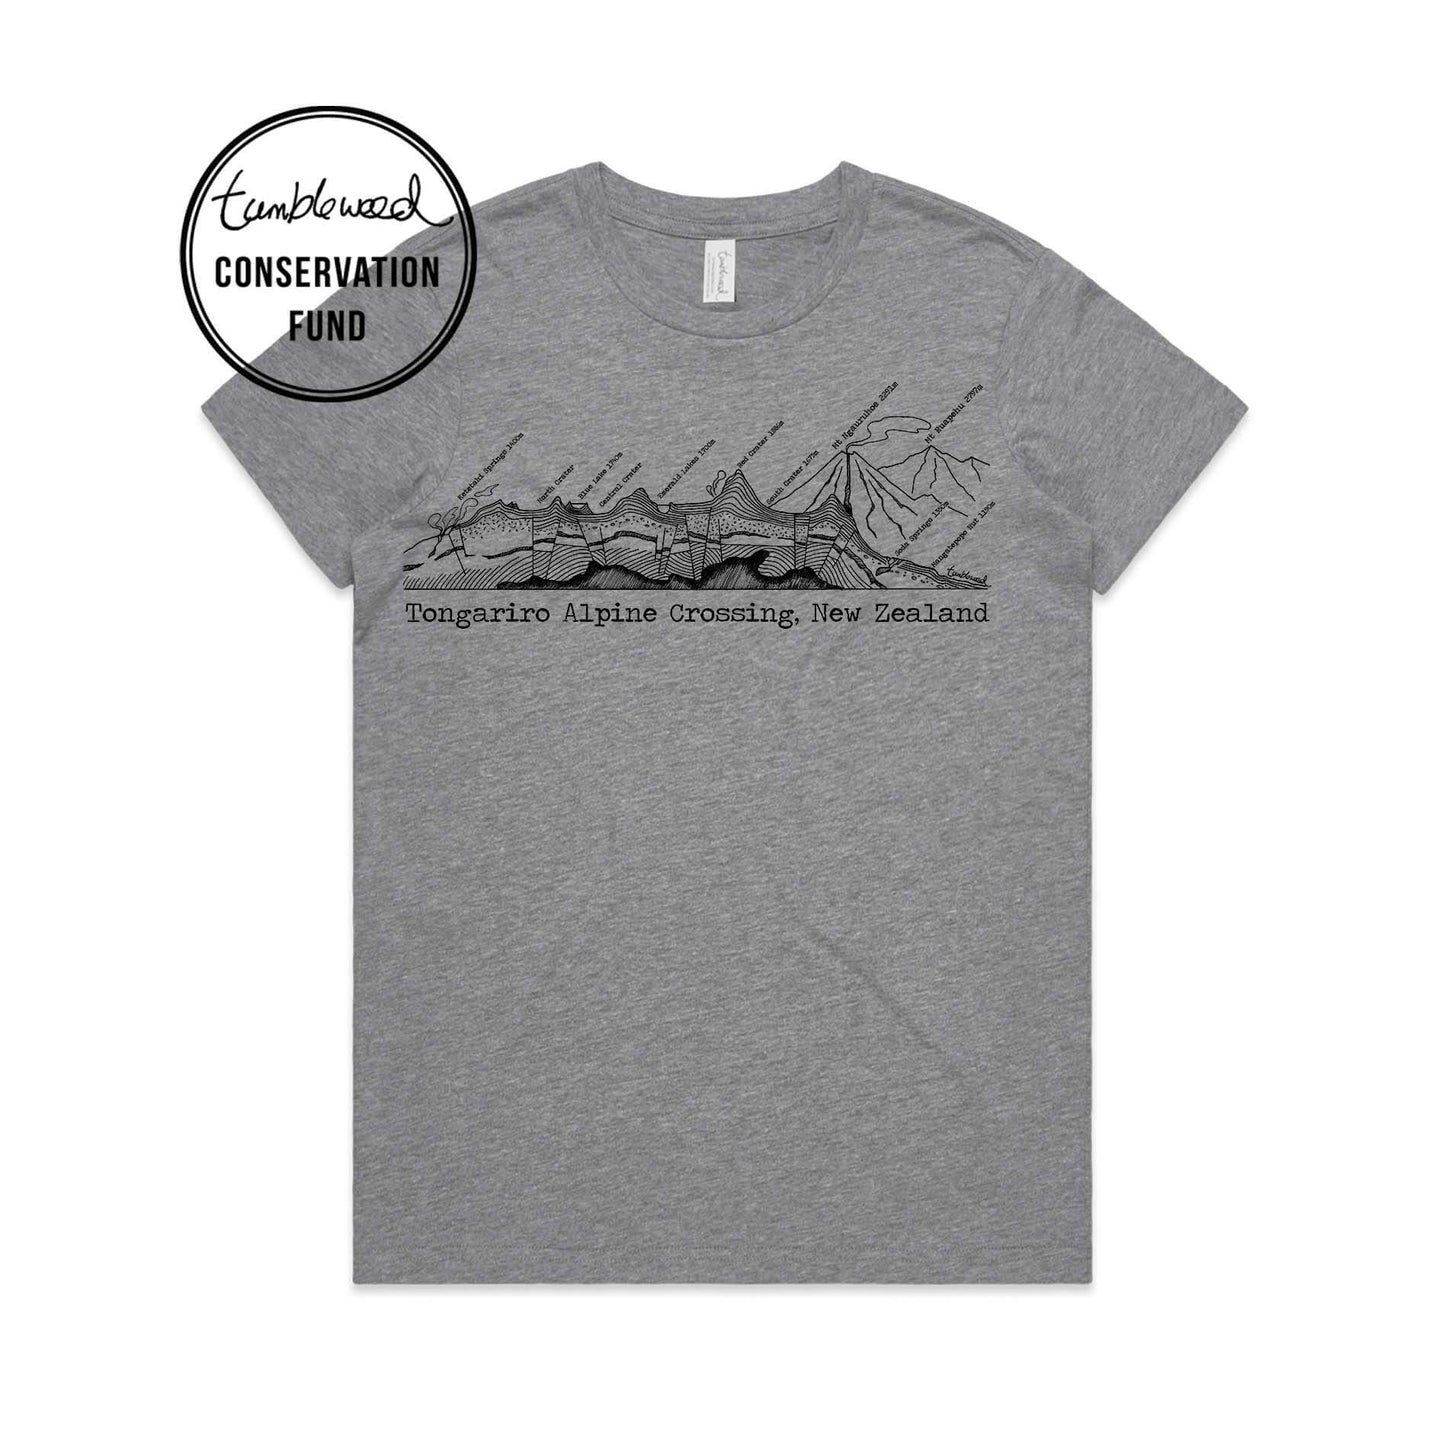 Grey marle, female t-shirt featuring a screen printed Tongariro Crossing design.